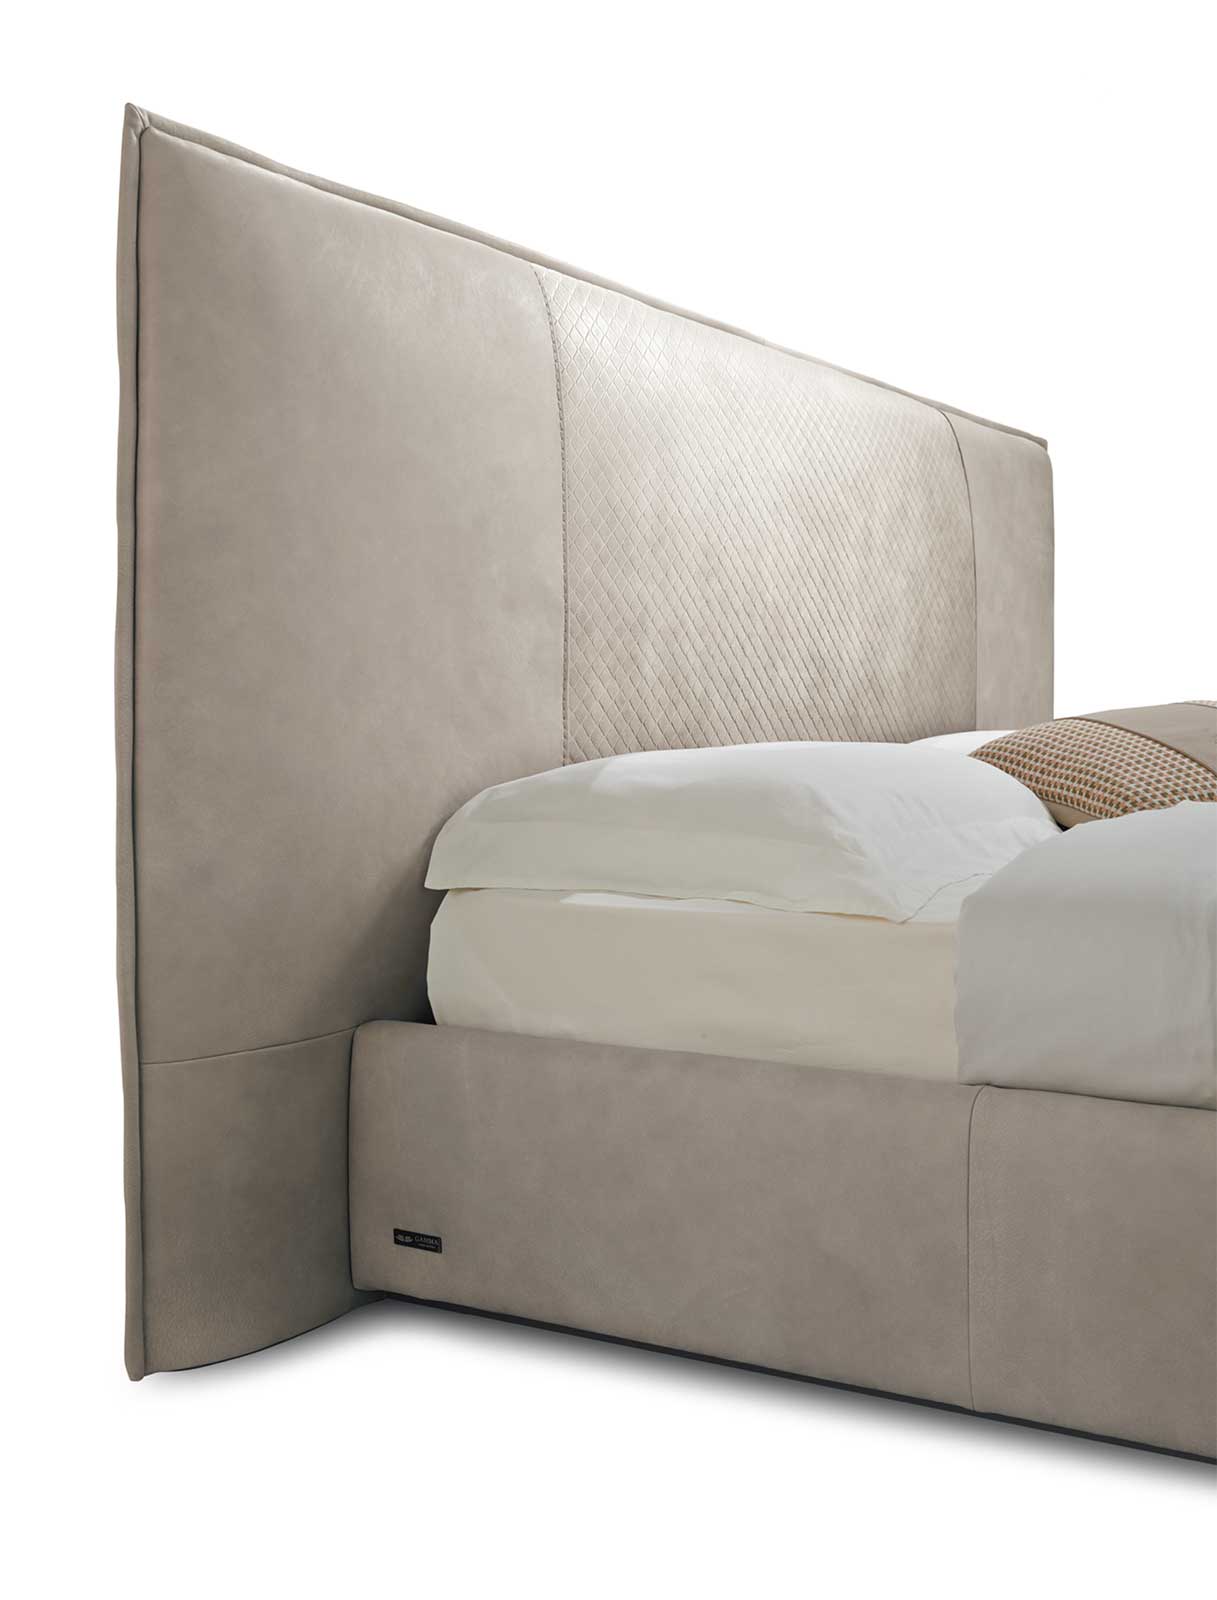 Batik Leather Bed Dream, Beige Leather Bed